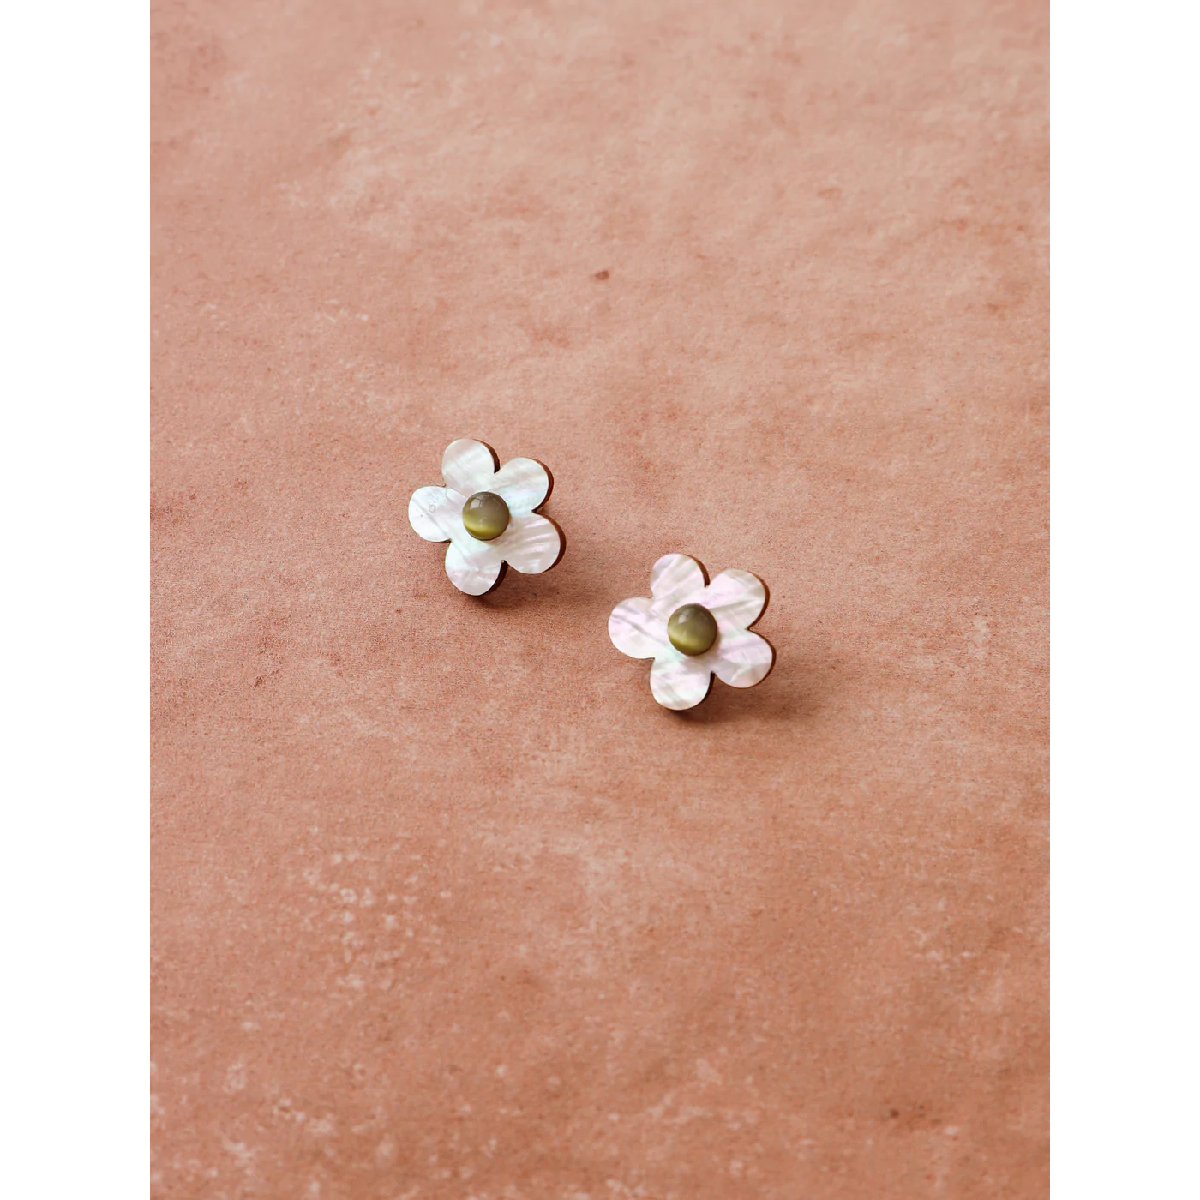 mondocherry | Wolf & Moon | mini bloom stud earrings | white pearl